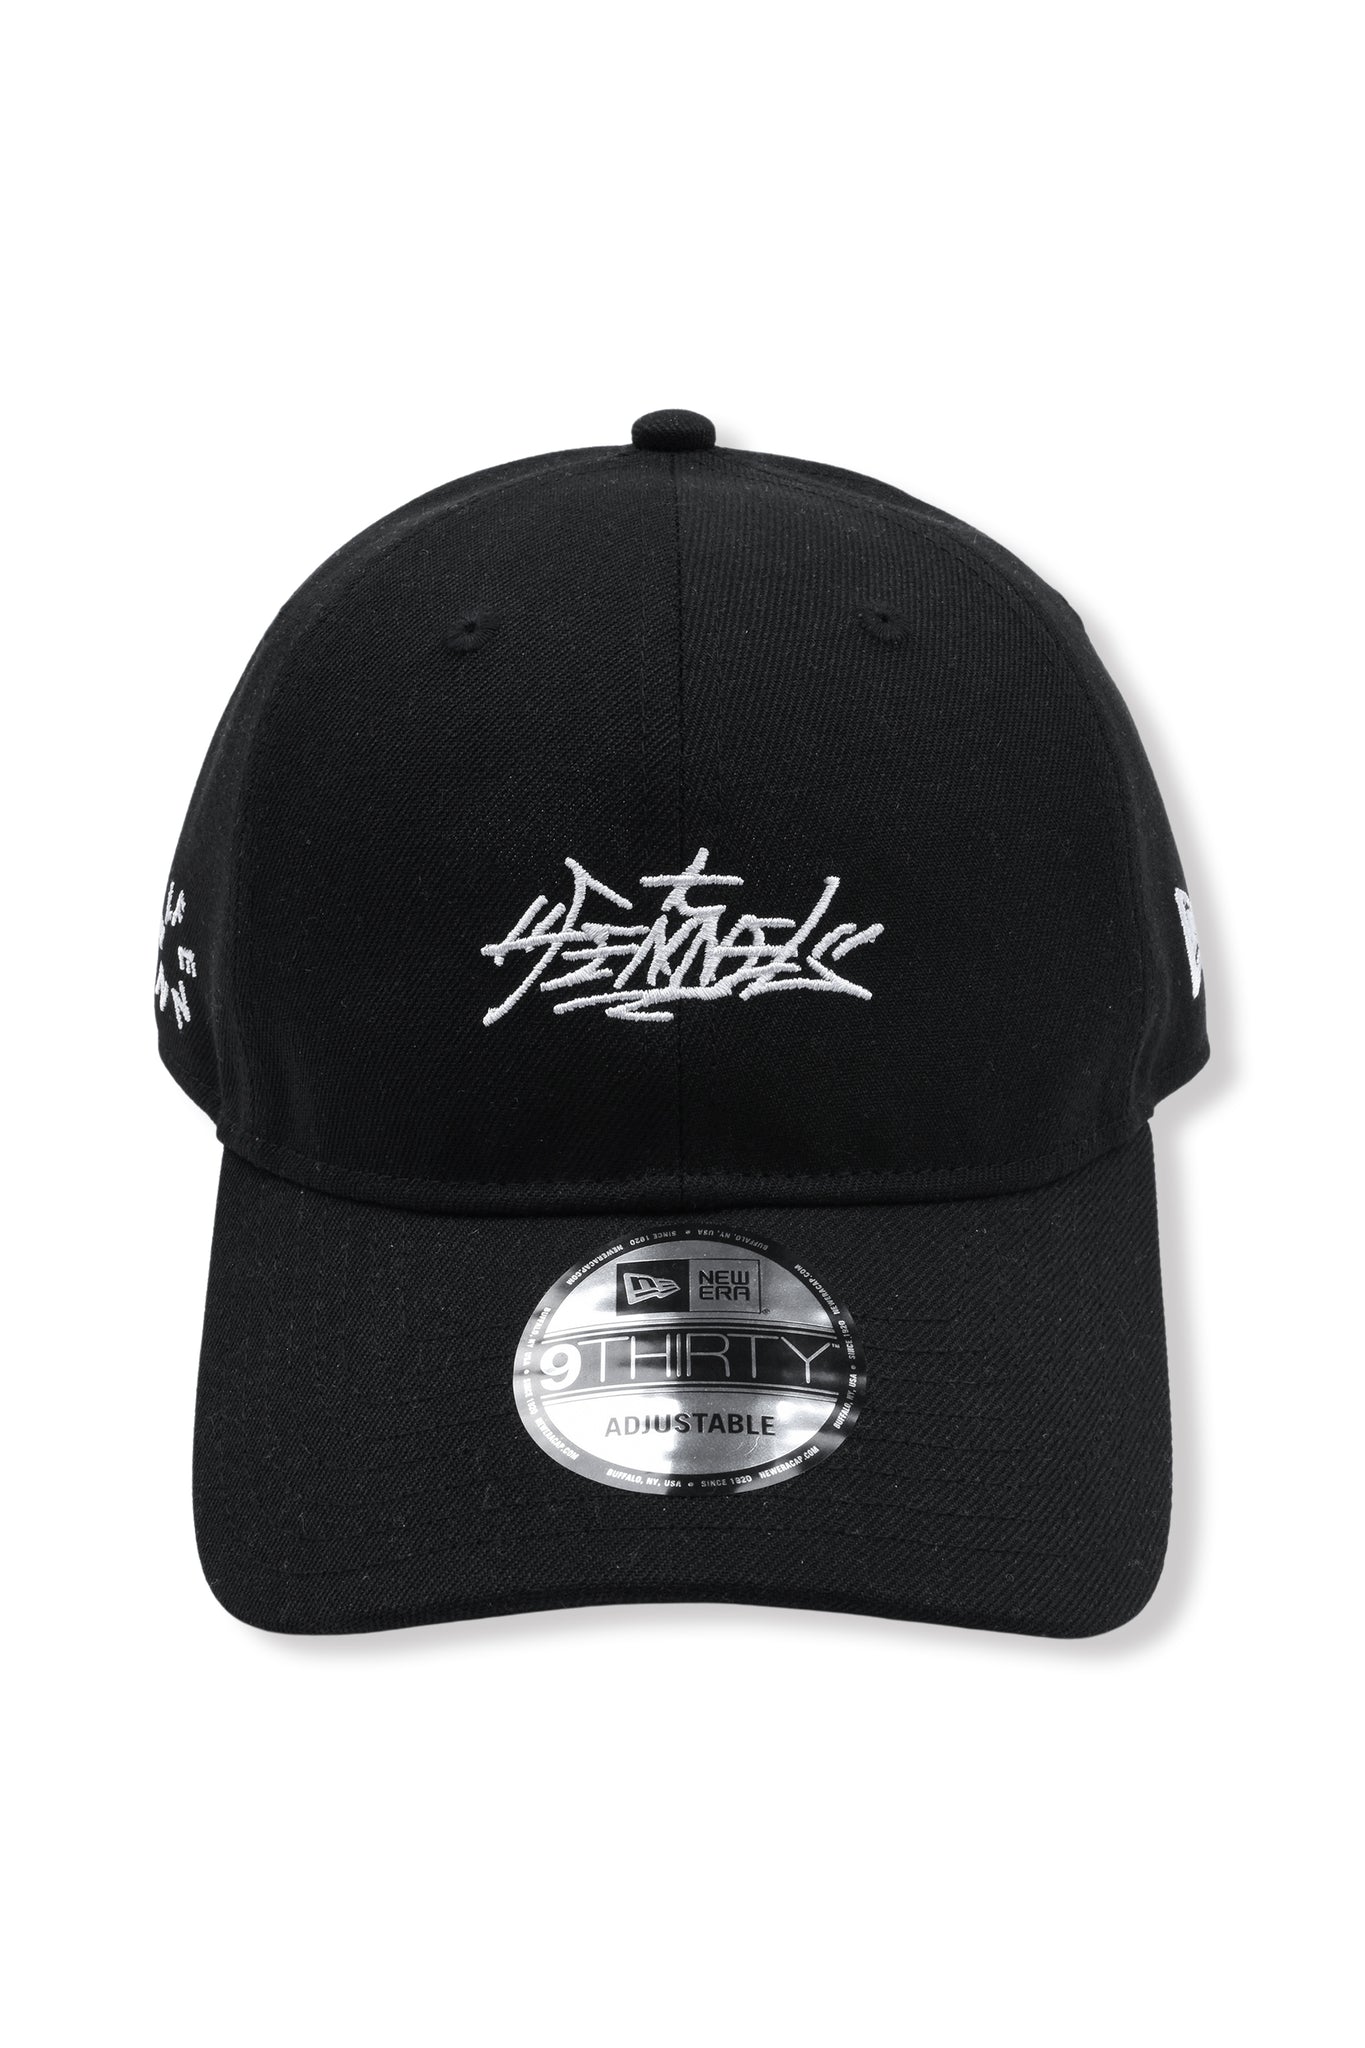 NEWERA | FENNEL 9THIRTY/930 BASEBALL CAP